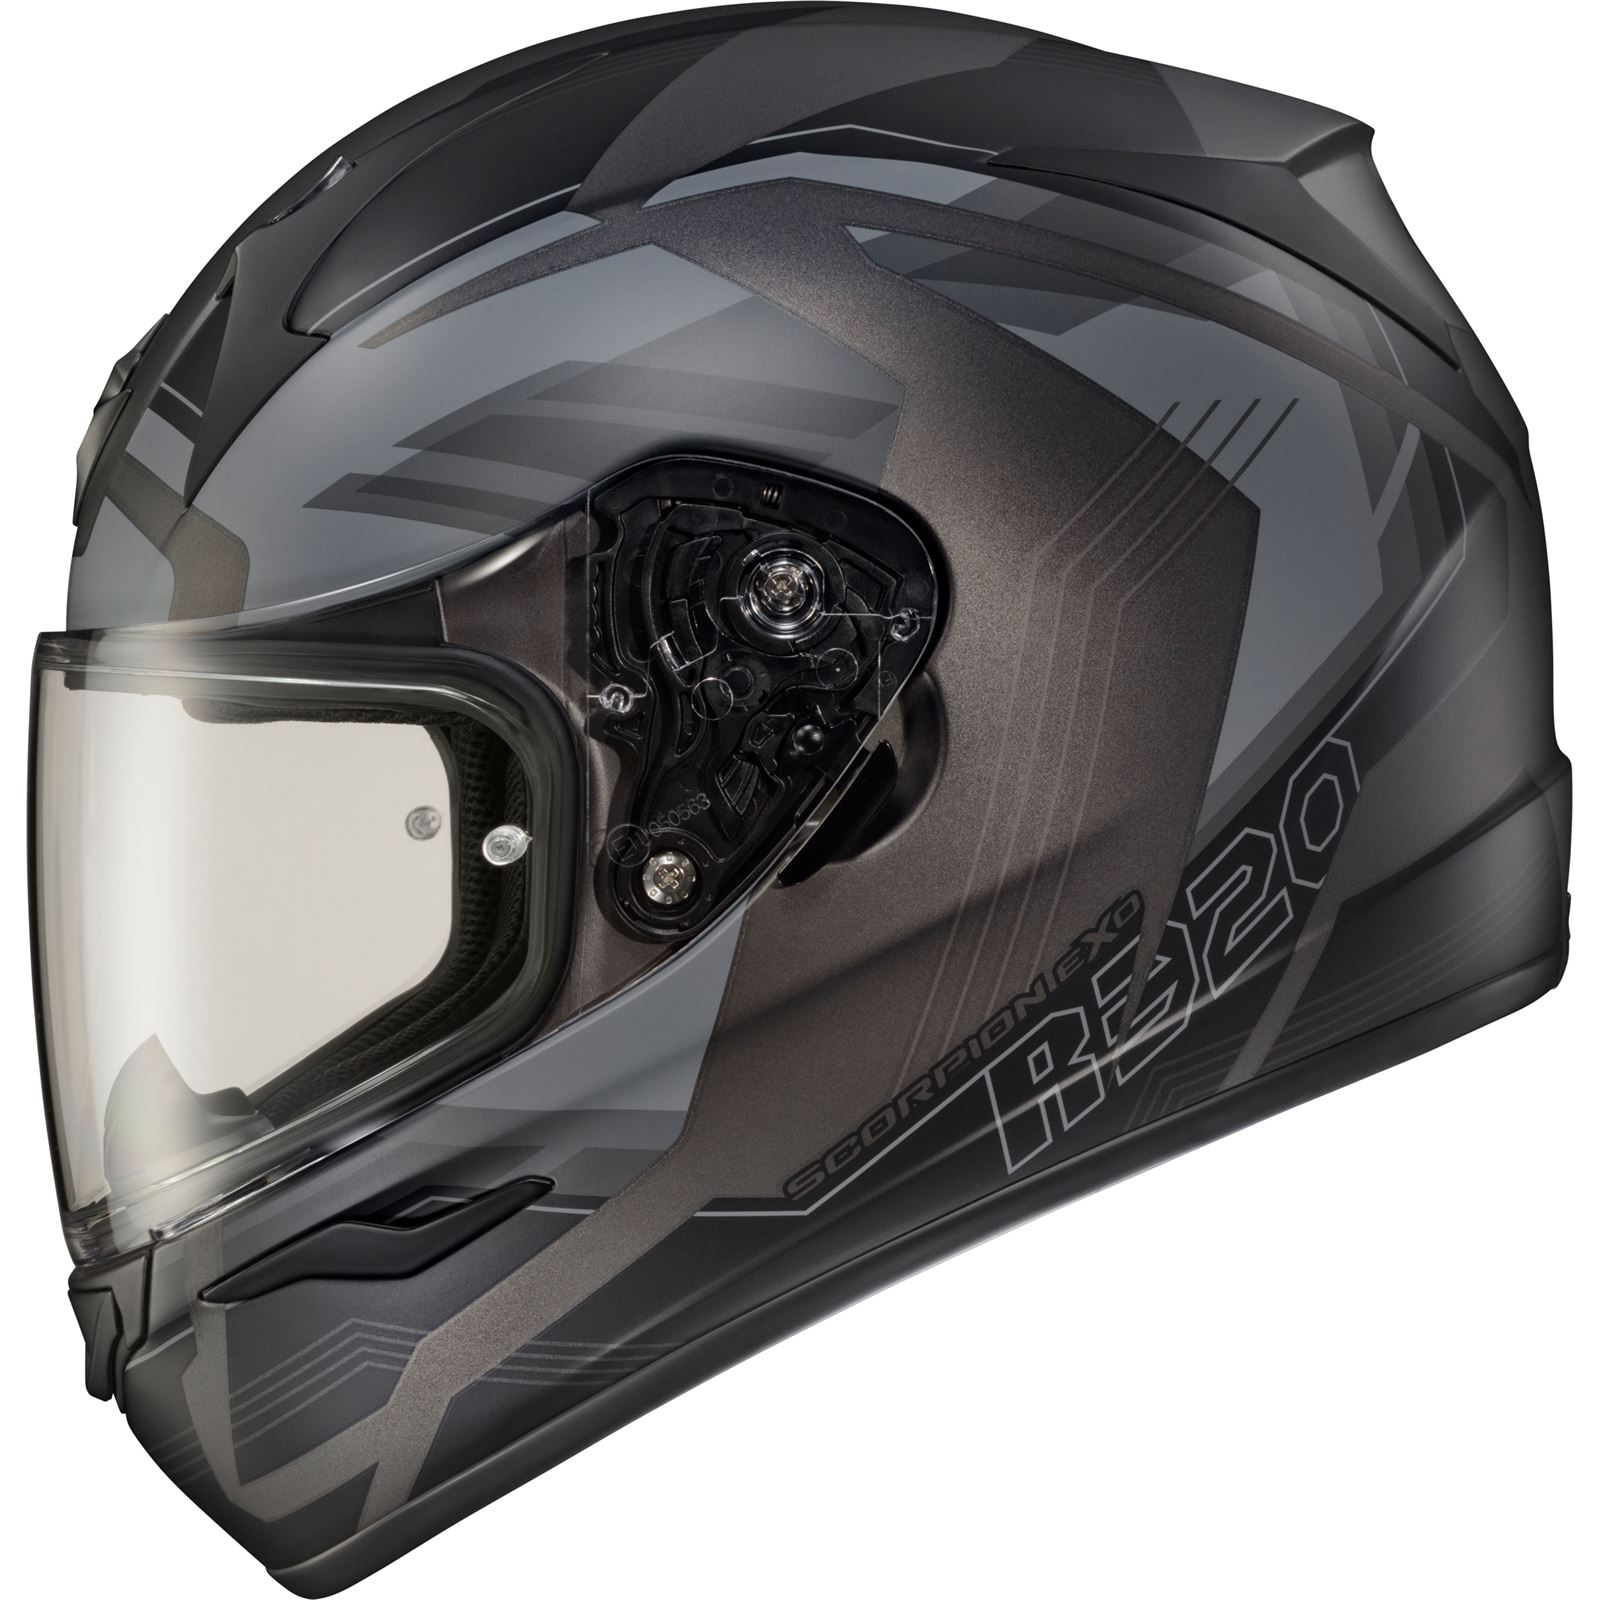 ScorpionEXO Exo-R320 Full-Face Helmet - Hudson Phantom - Medium